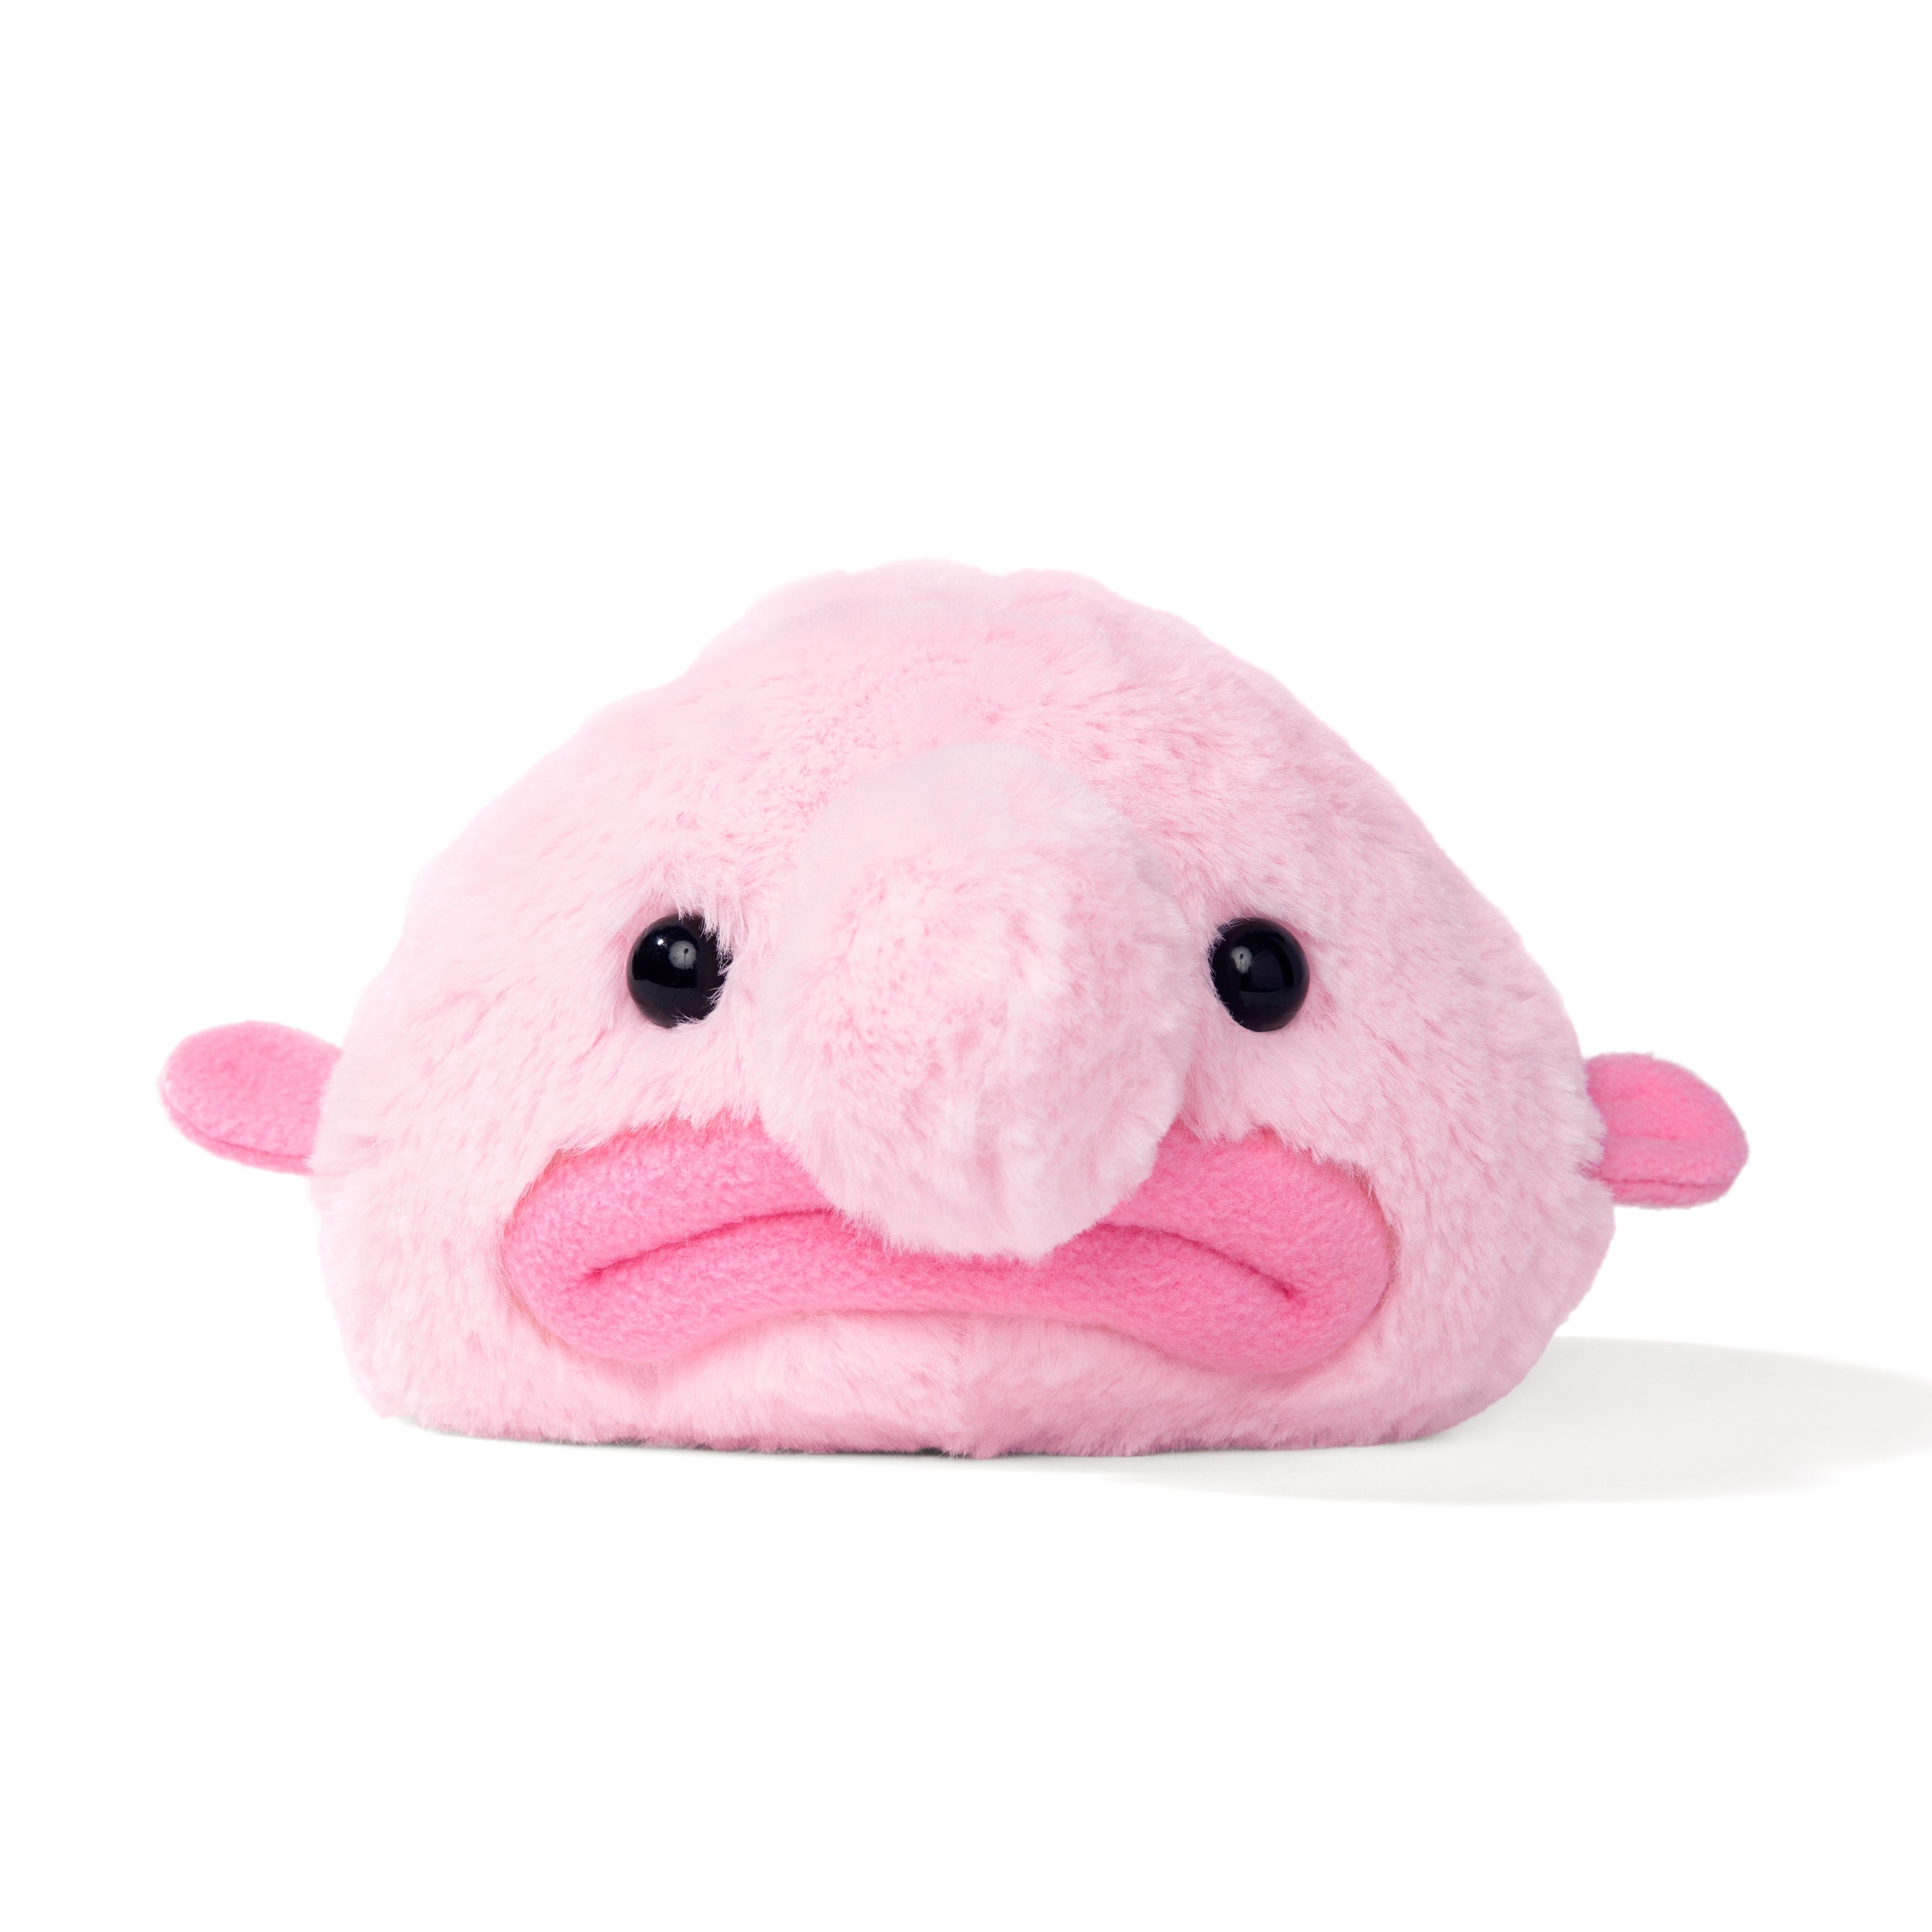 blobfish plush toy